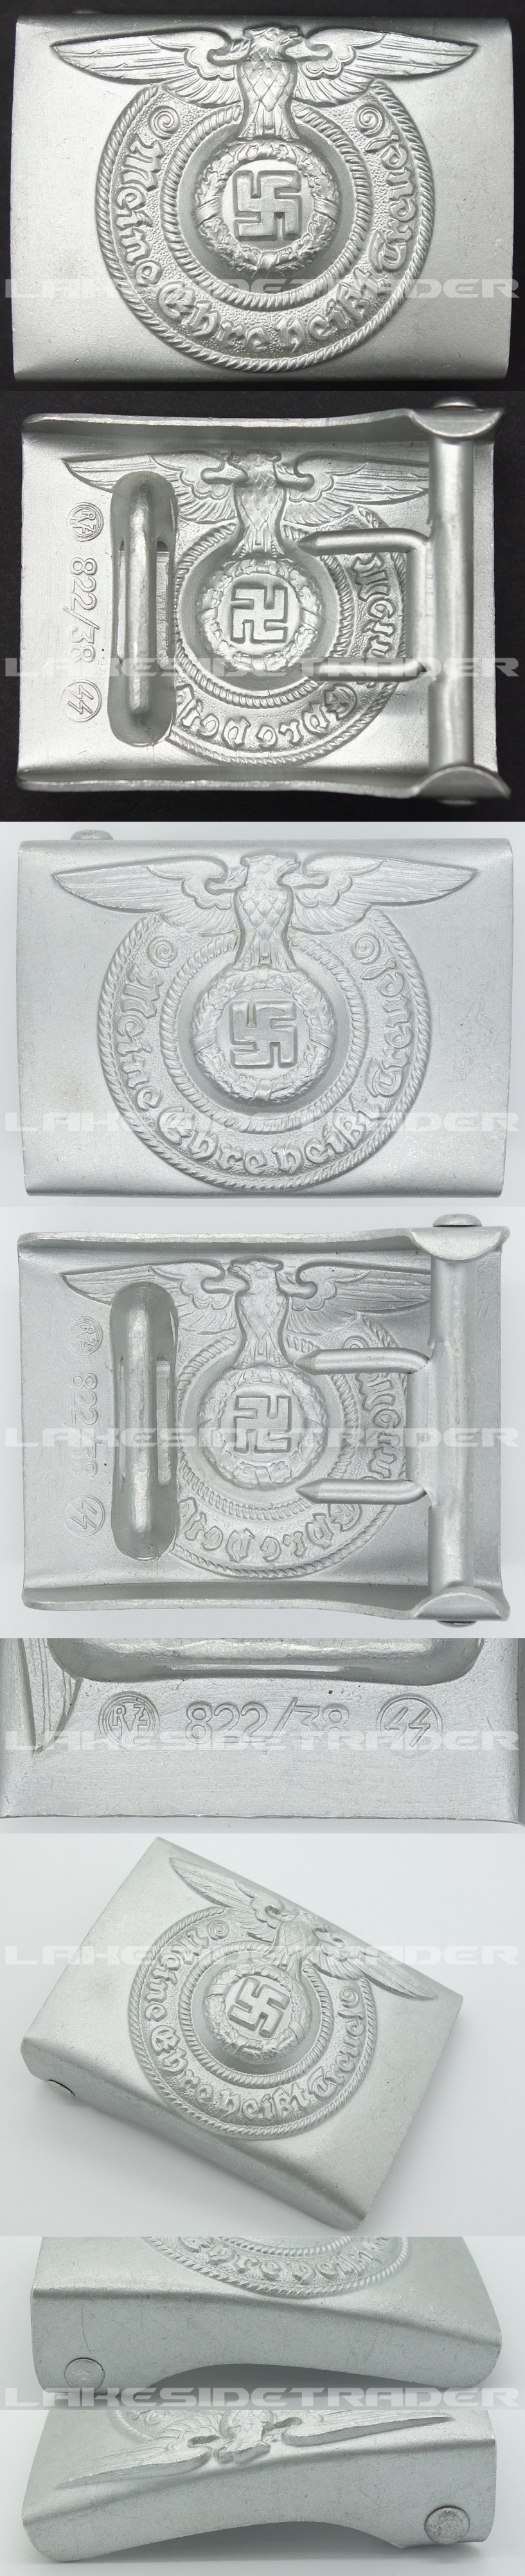 Mint SS EM Belt Buckle by RS&S 1938